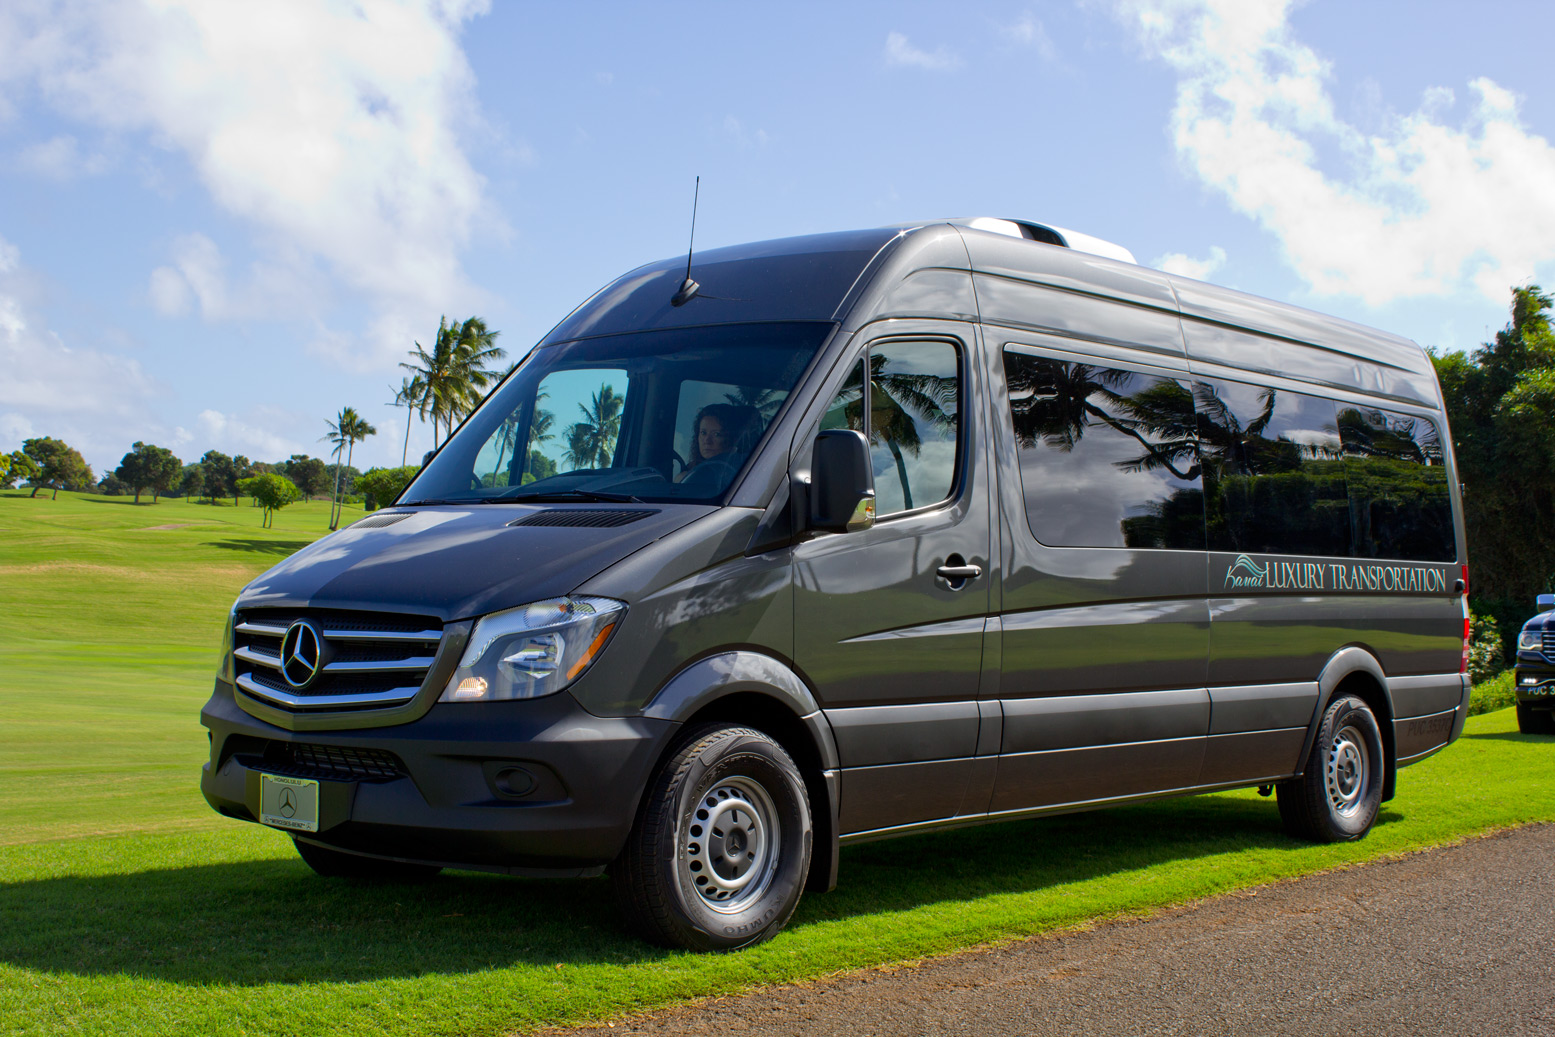 kauai sighsteeing land tours - Kauai Vacation Tours